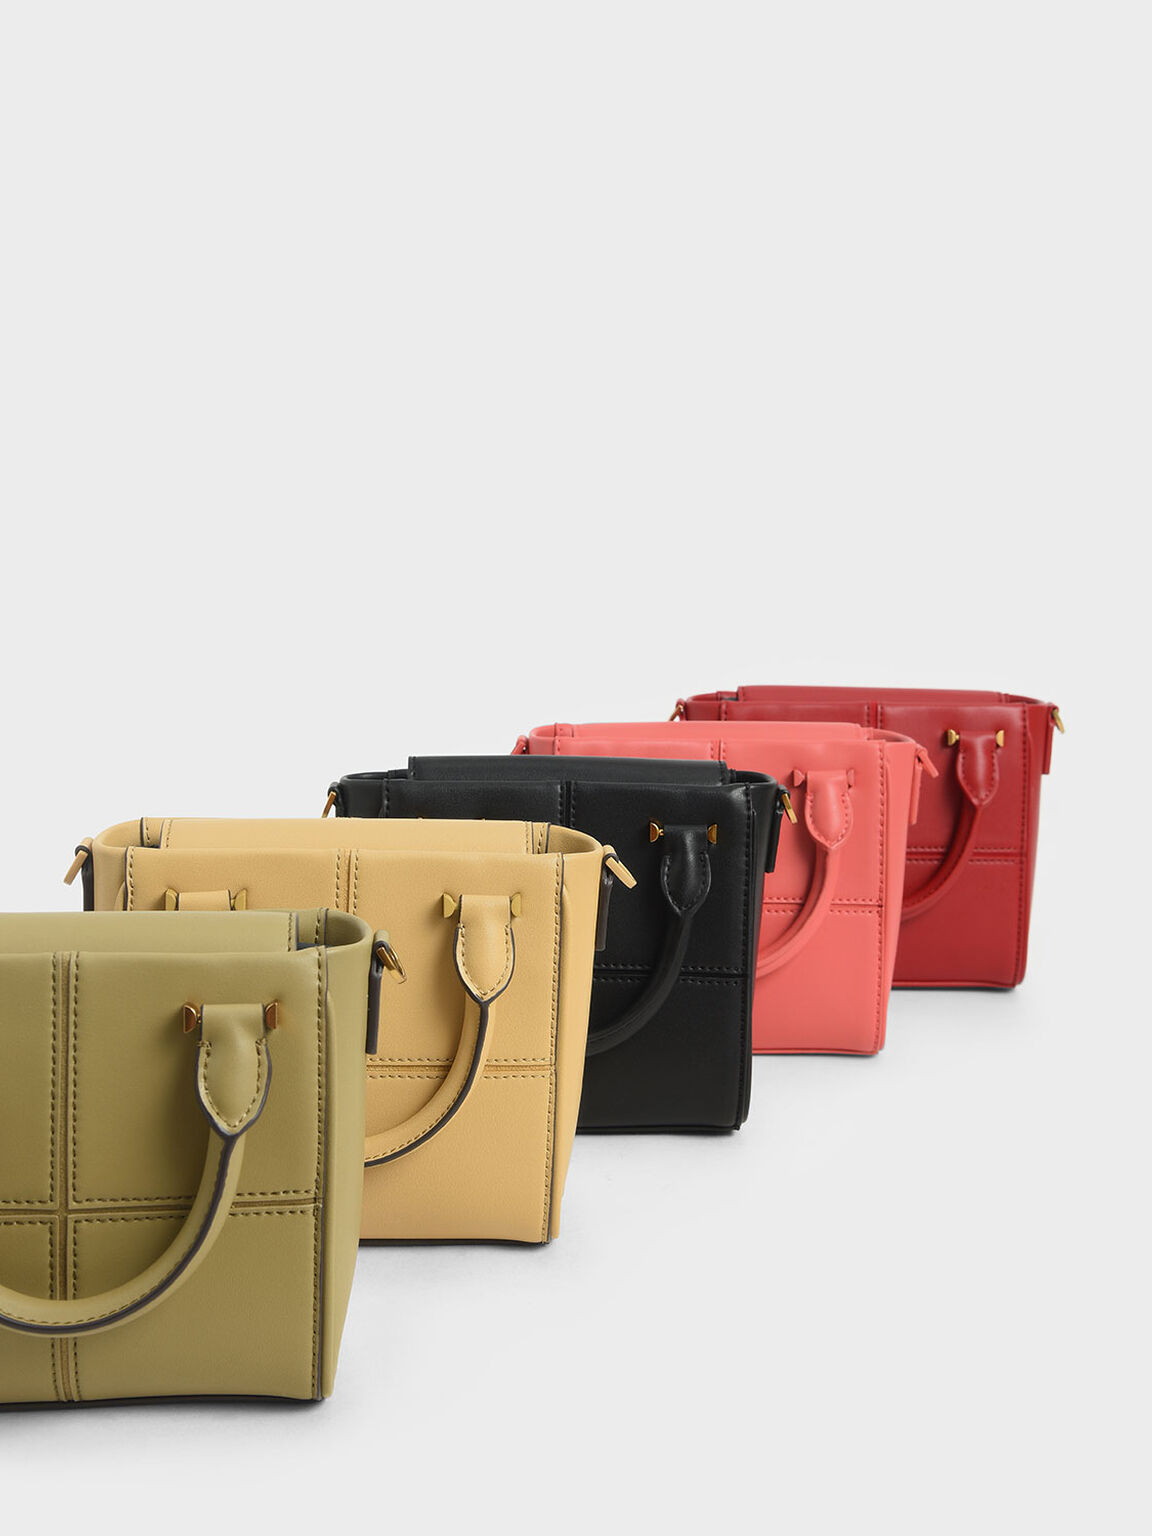 Textured Panelled Top Handle Bag, Coral, hi-res